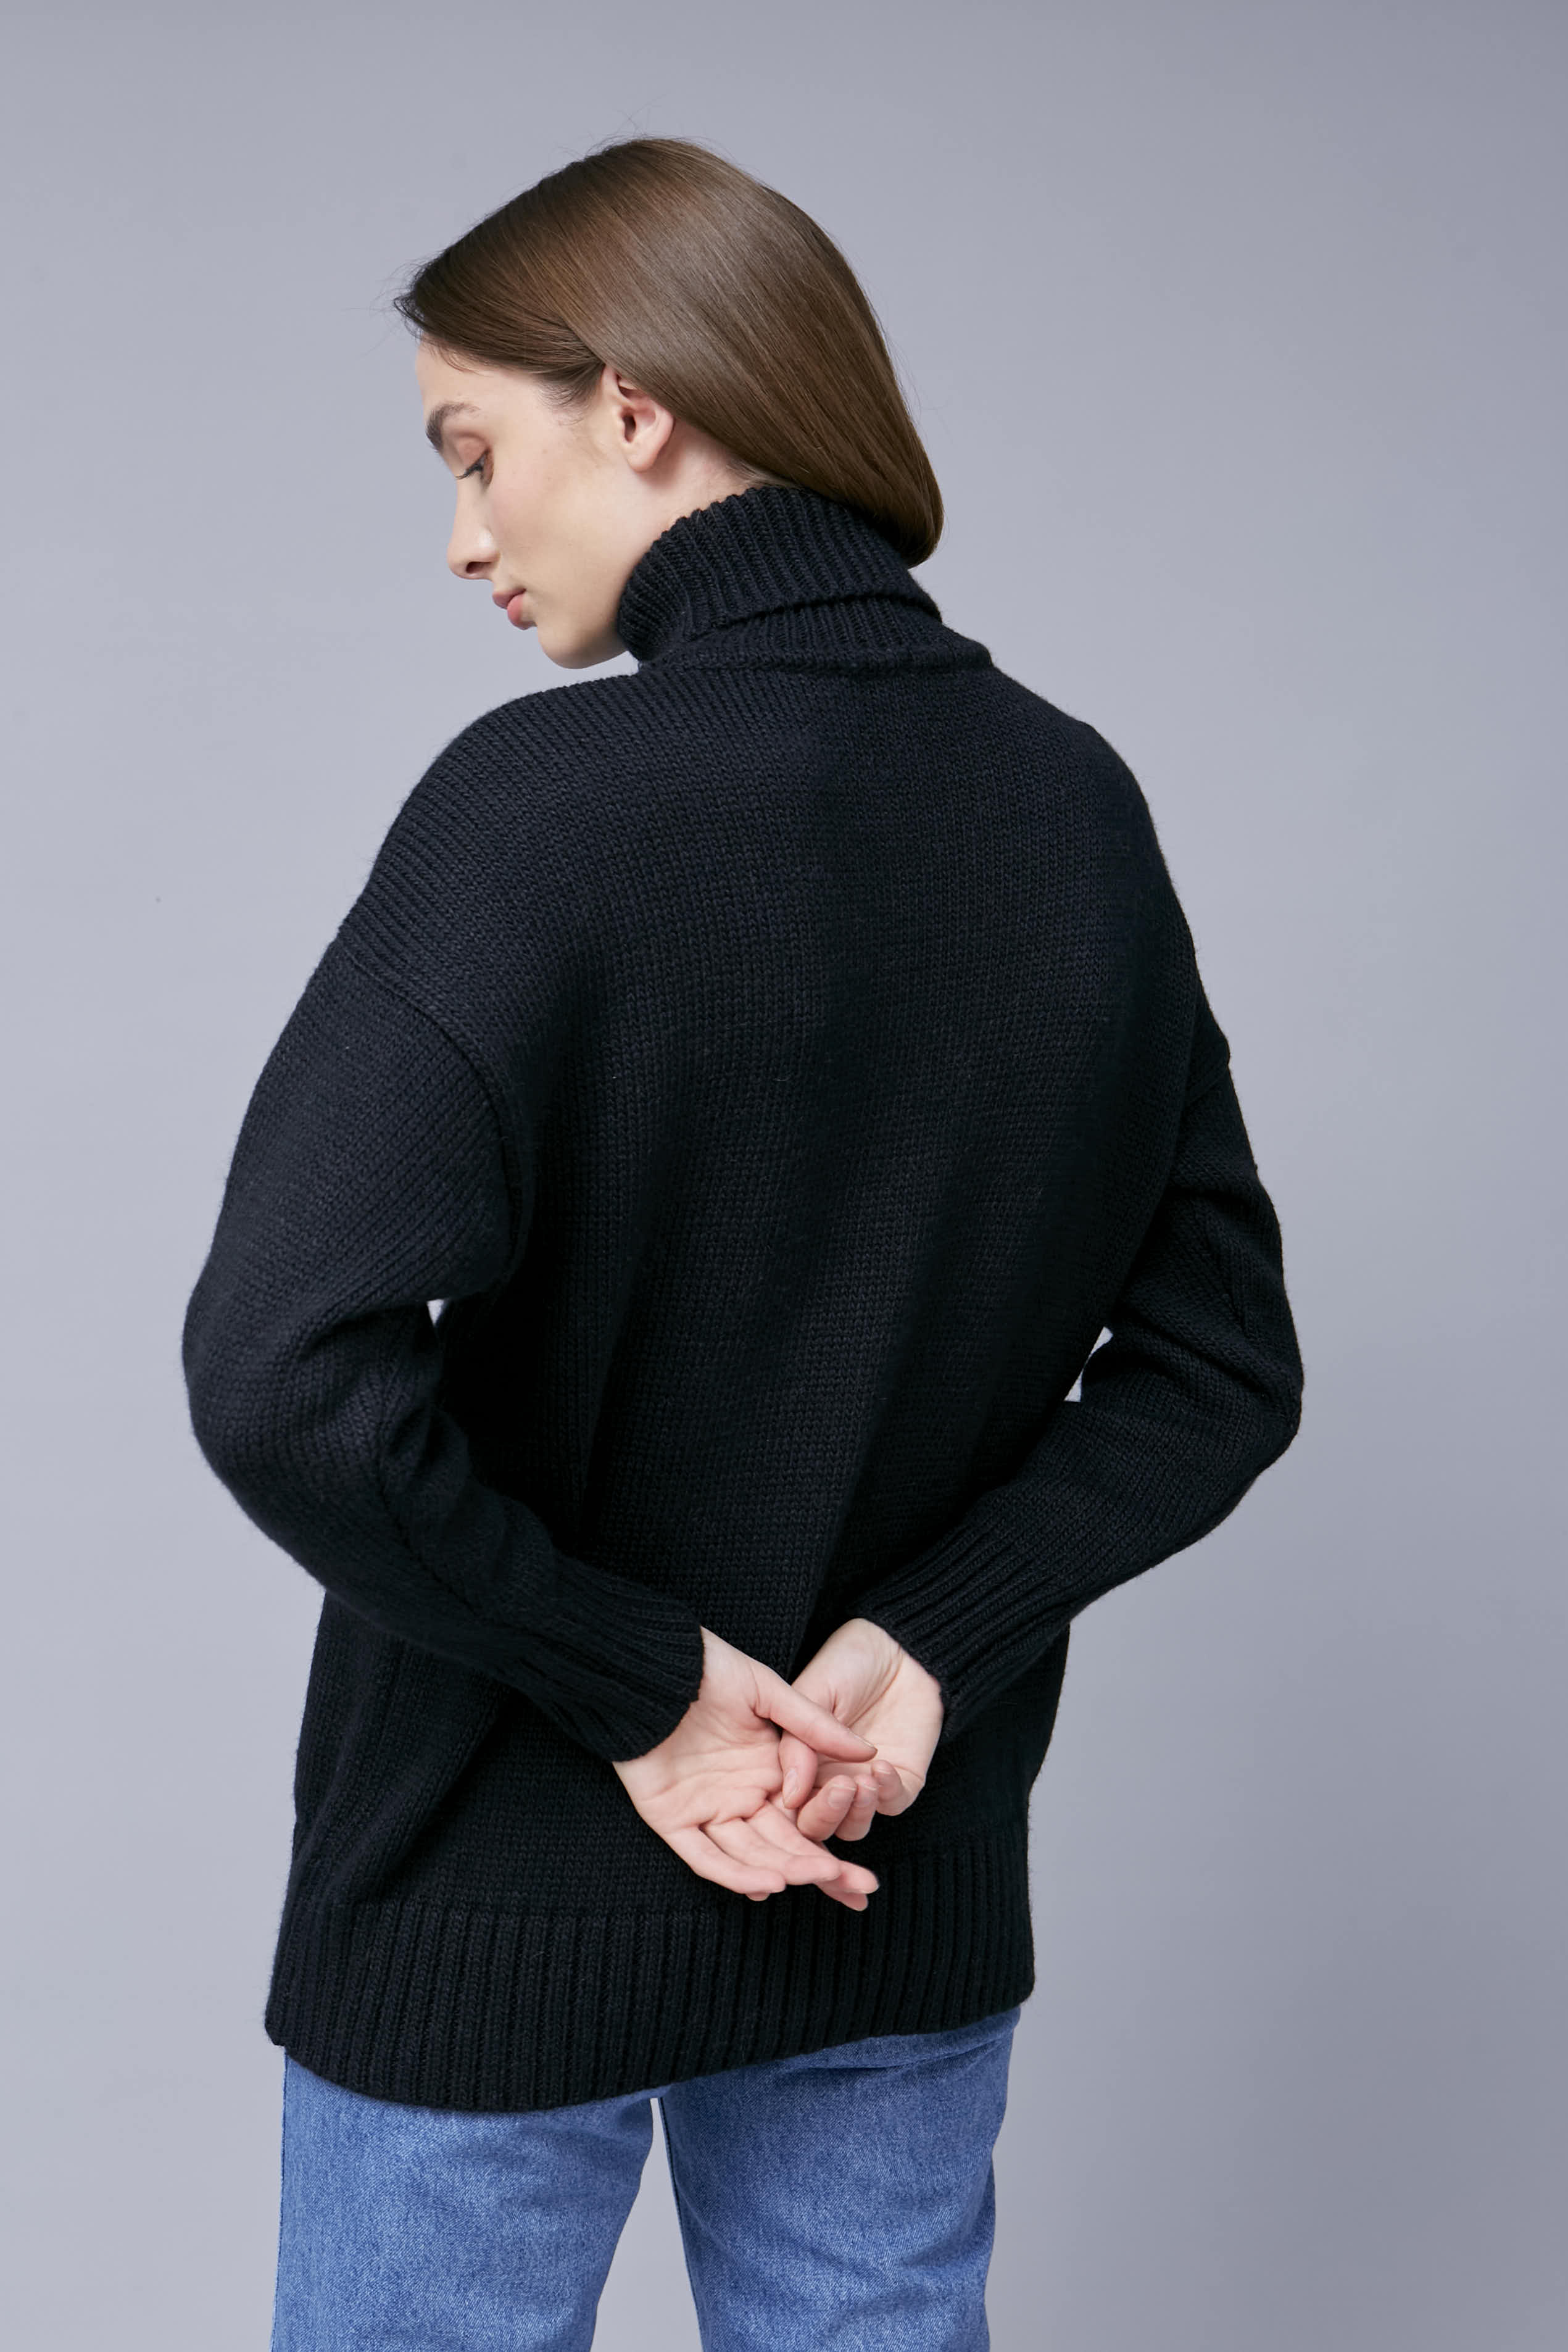 Black knit turtleneck sweater, photo 3